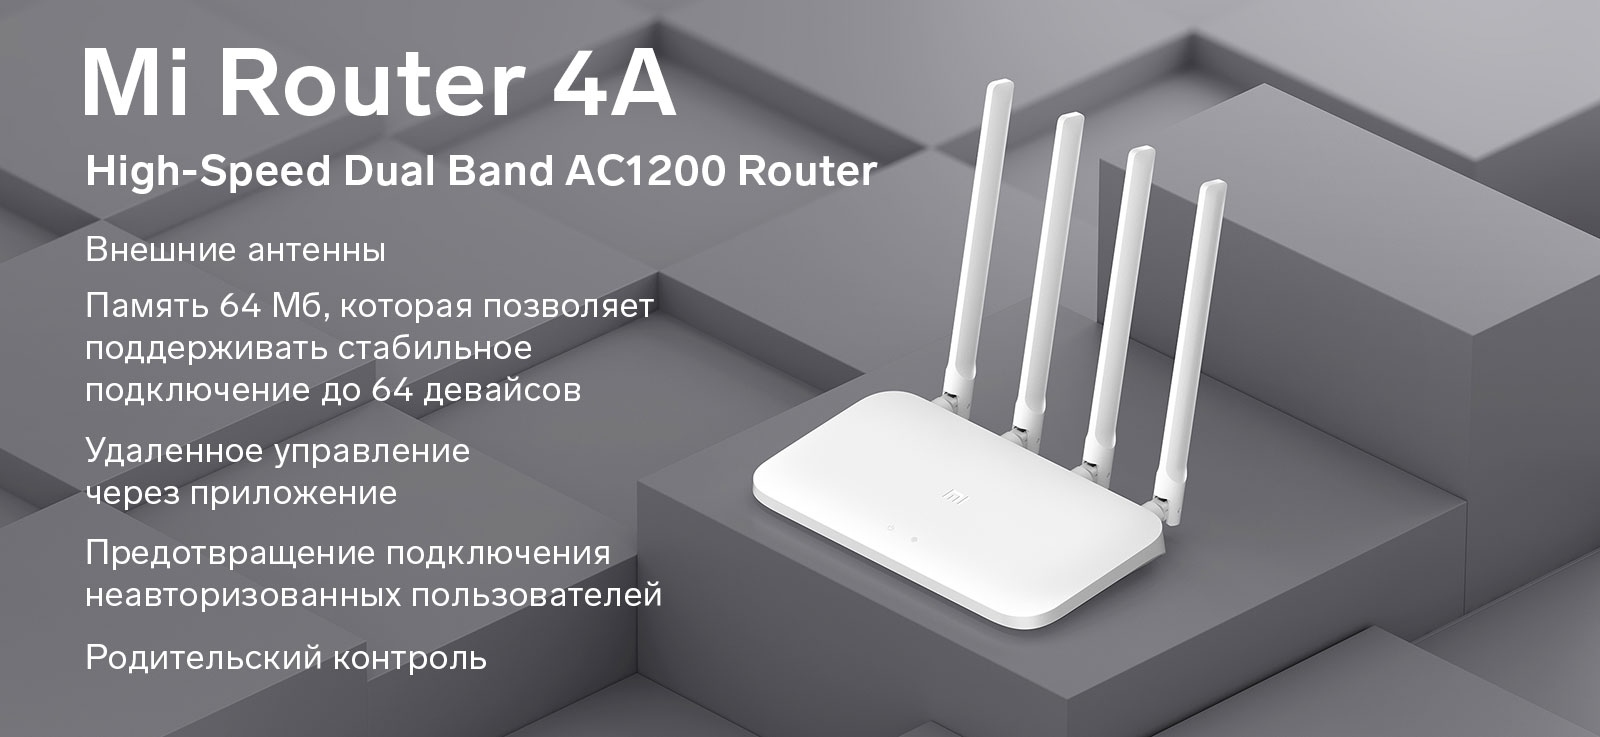 Mi Router 4A